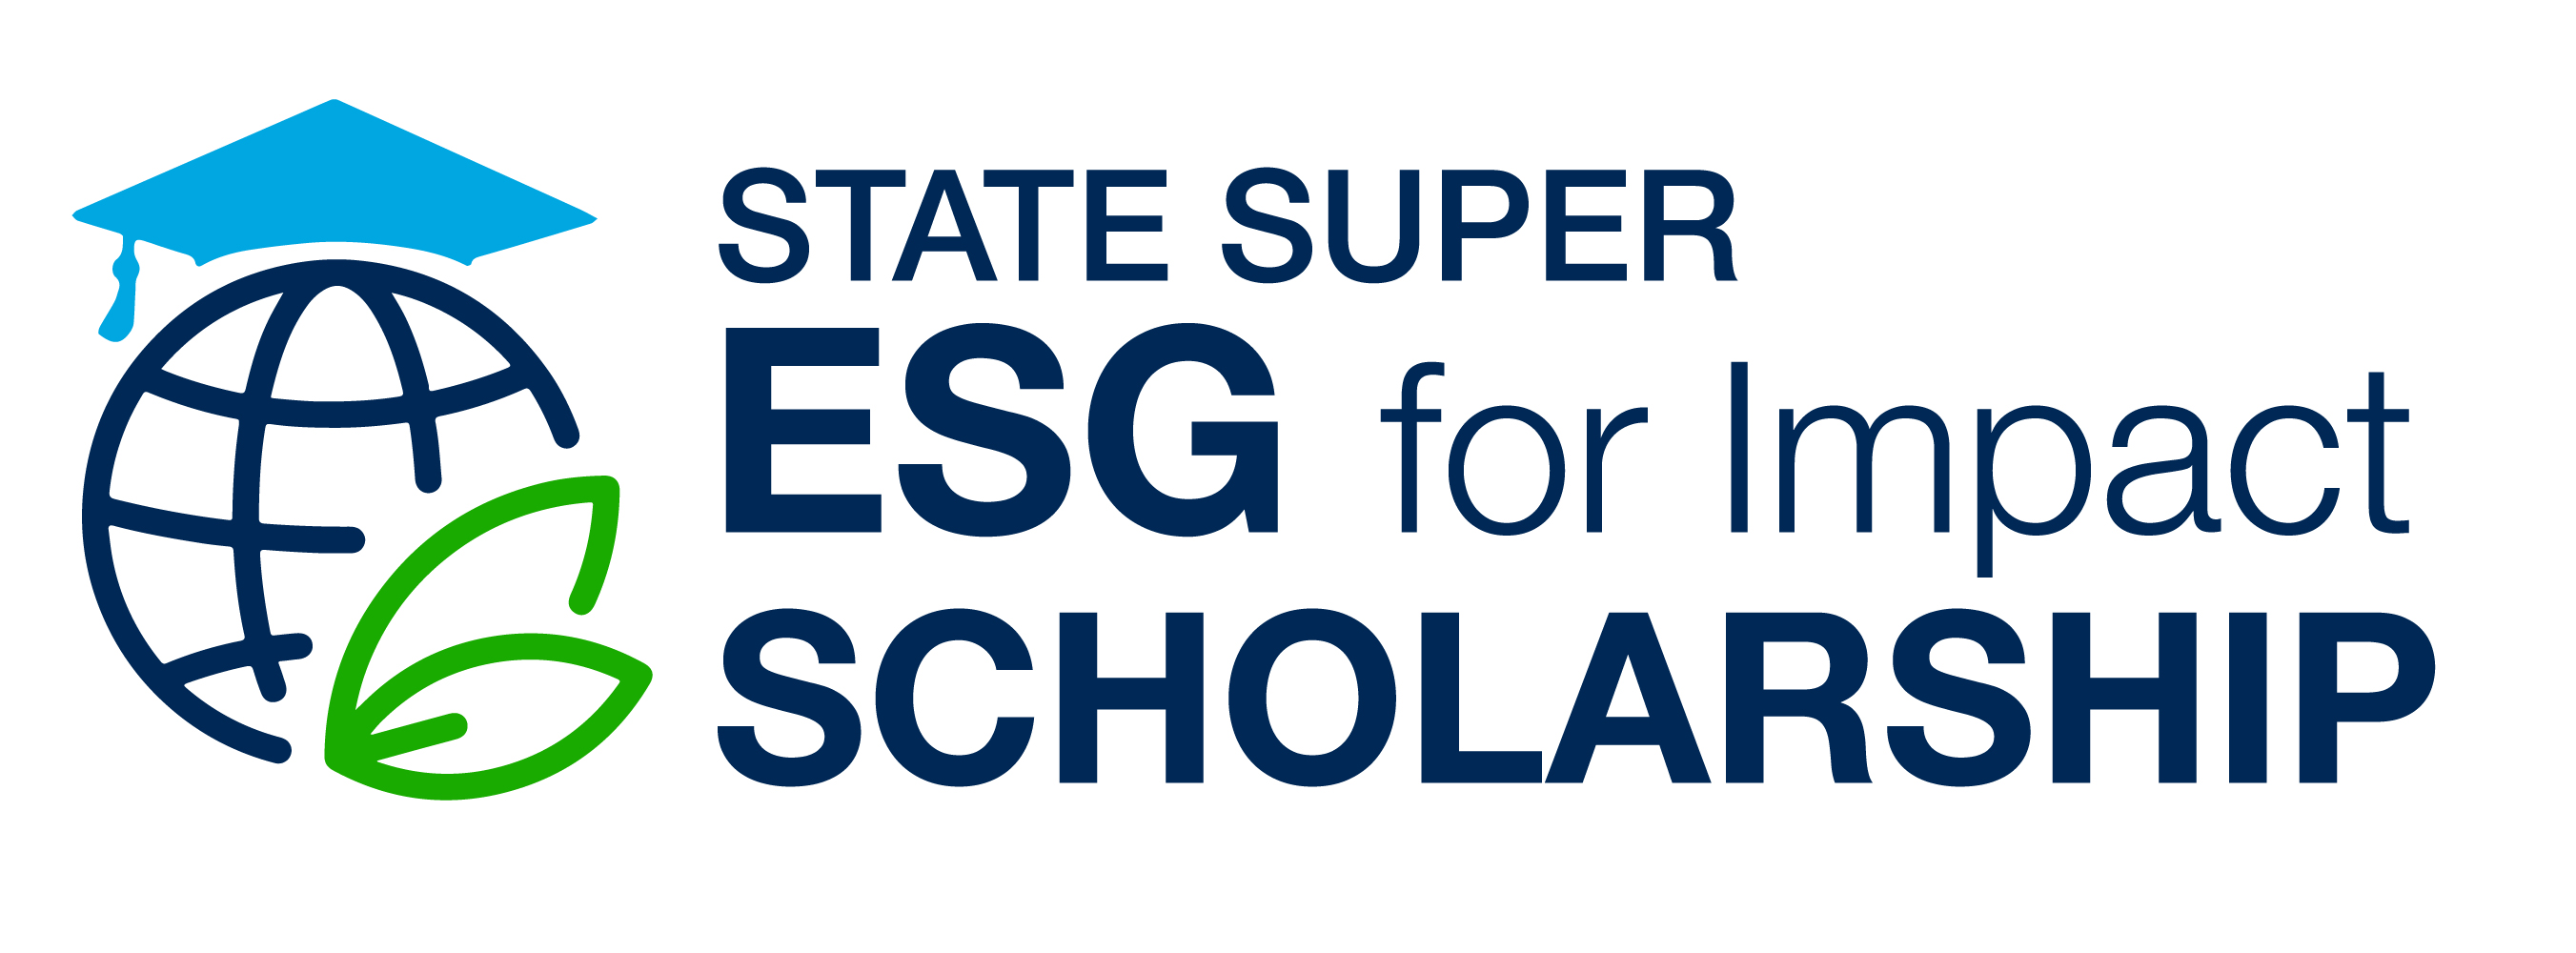 State Super ESG logo